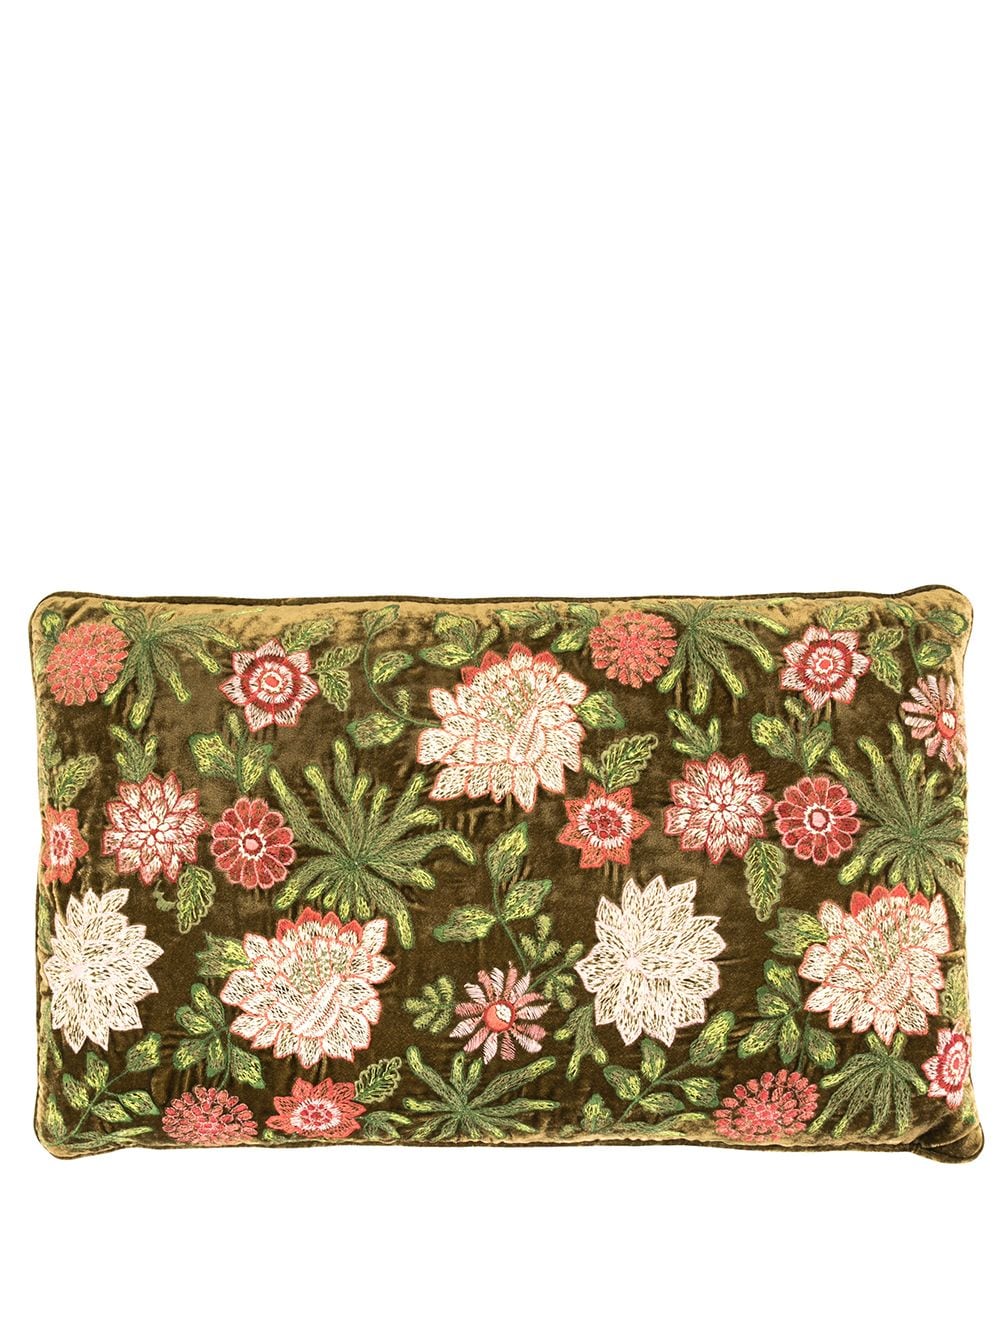 Anke Drechsel embroidered floral cushion - Green von Anke Drechsel